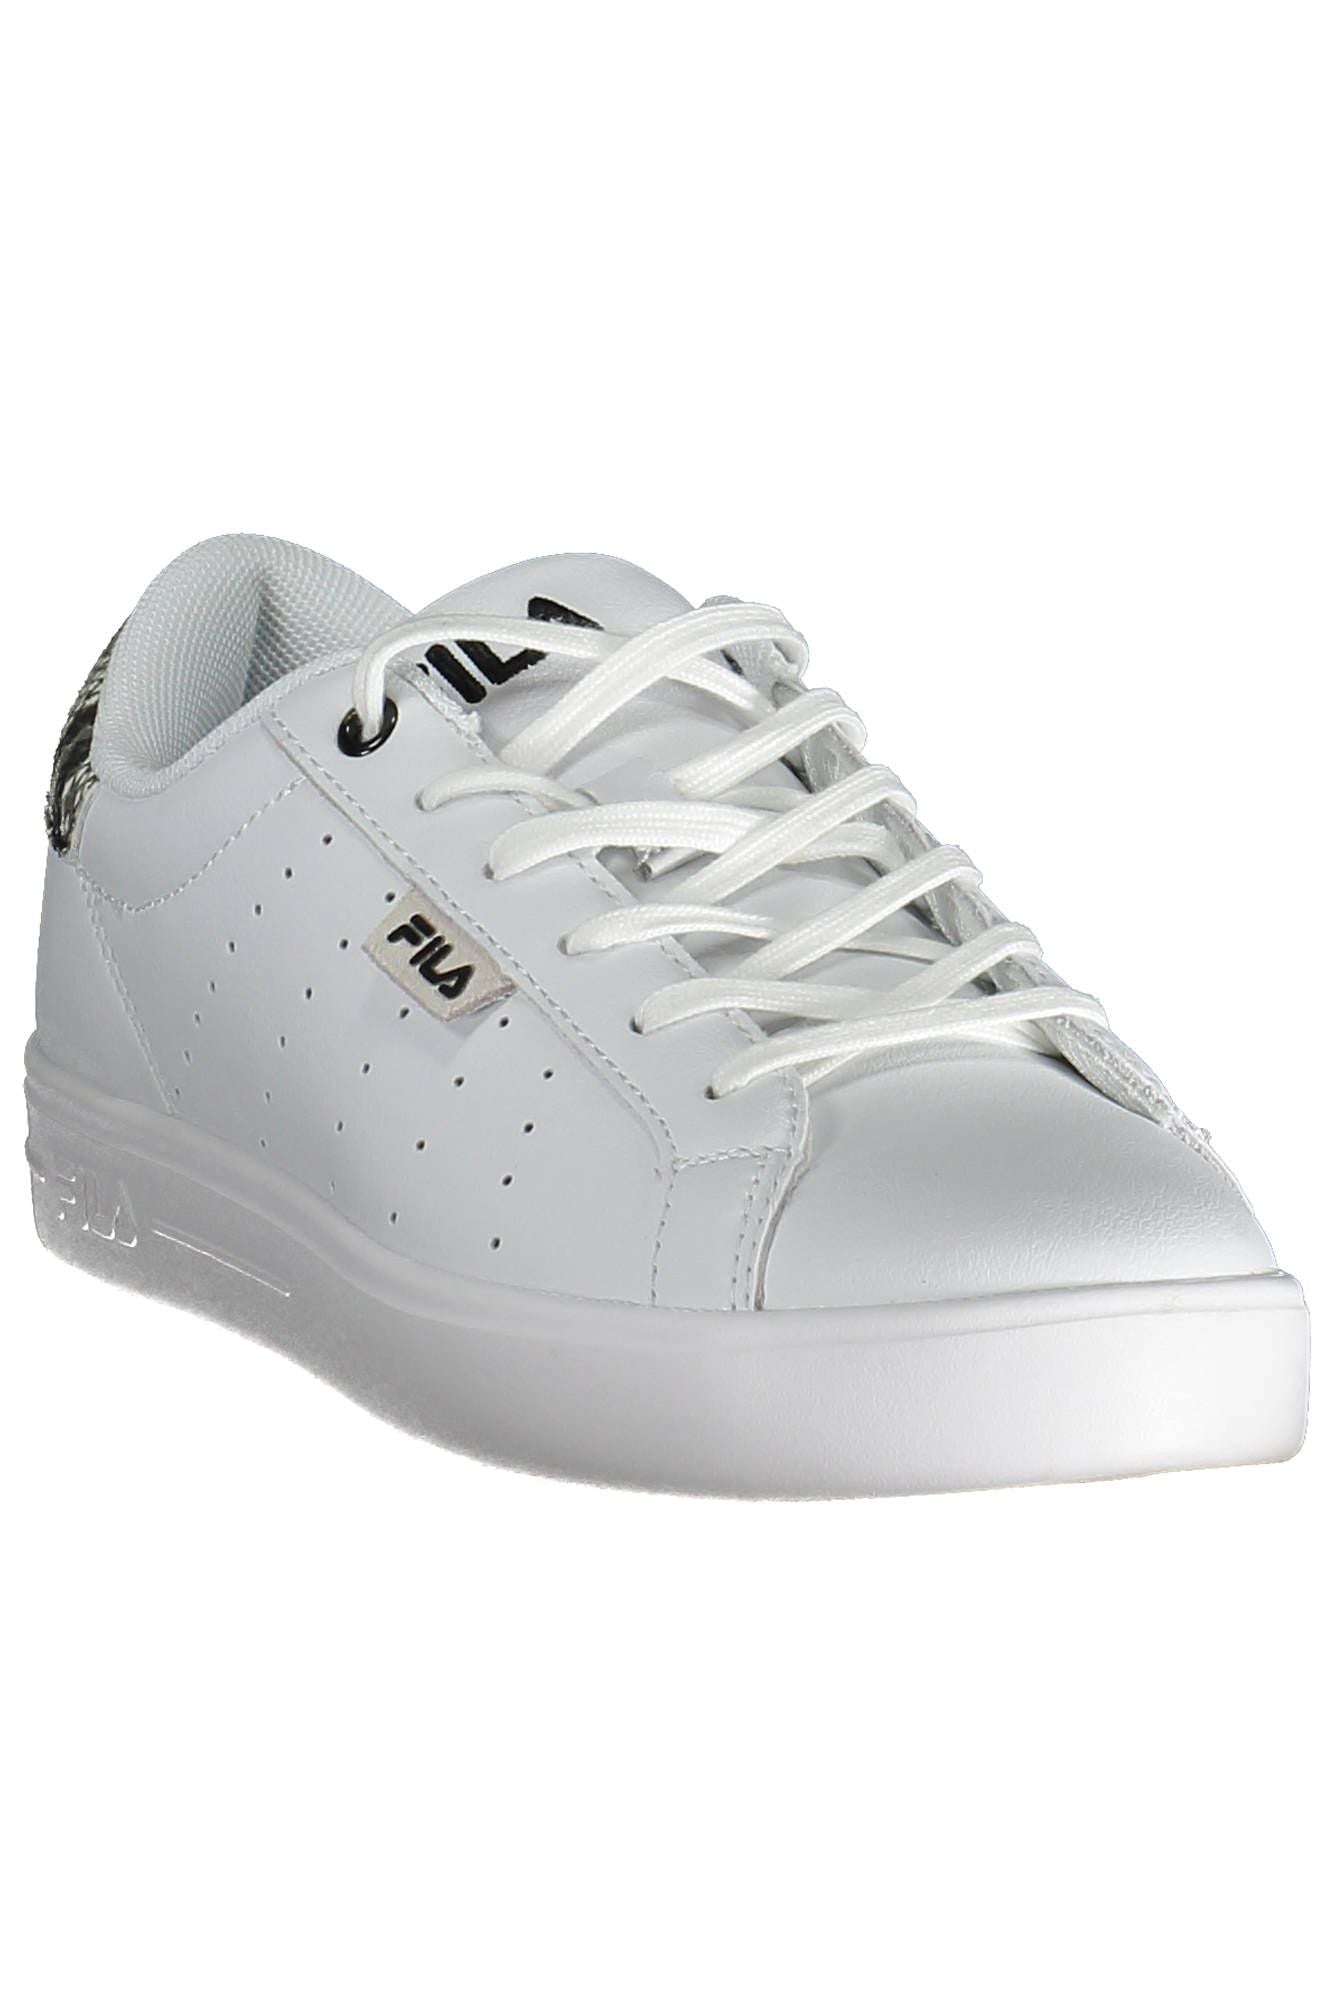 Fila White Polyester Sneaker